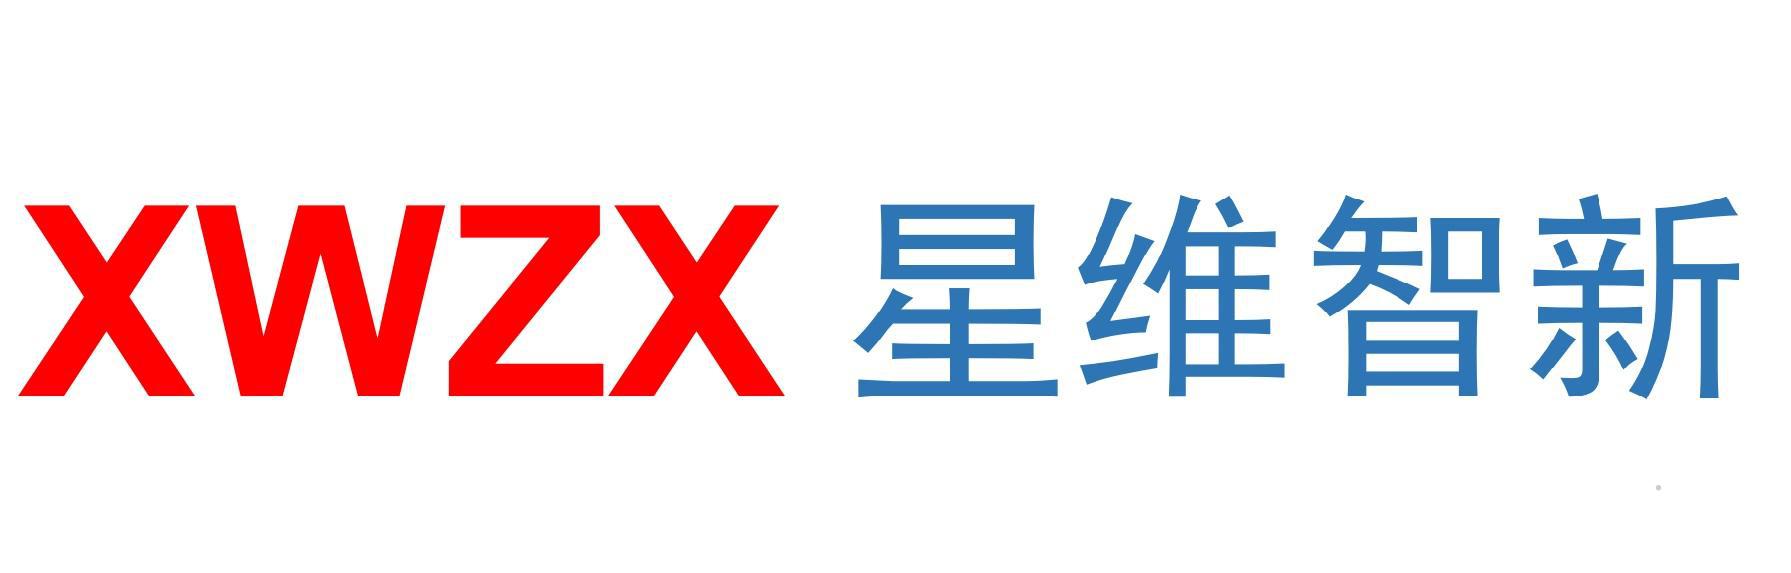 XWZX 星维智新logo